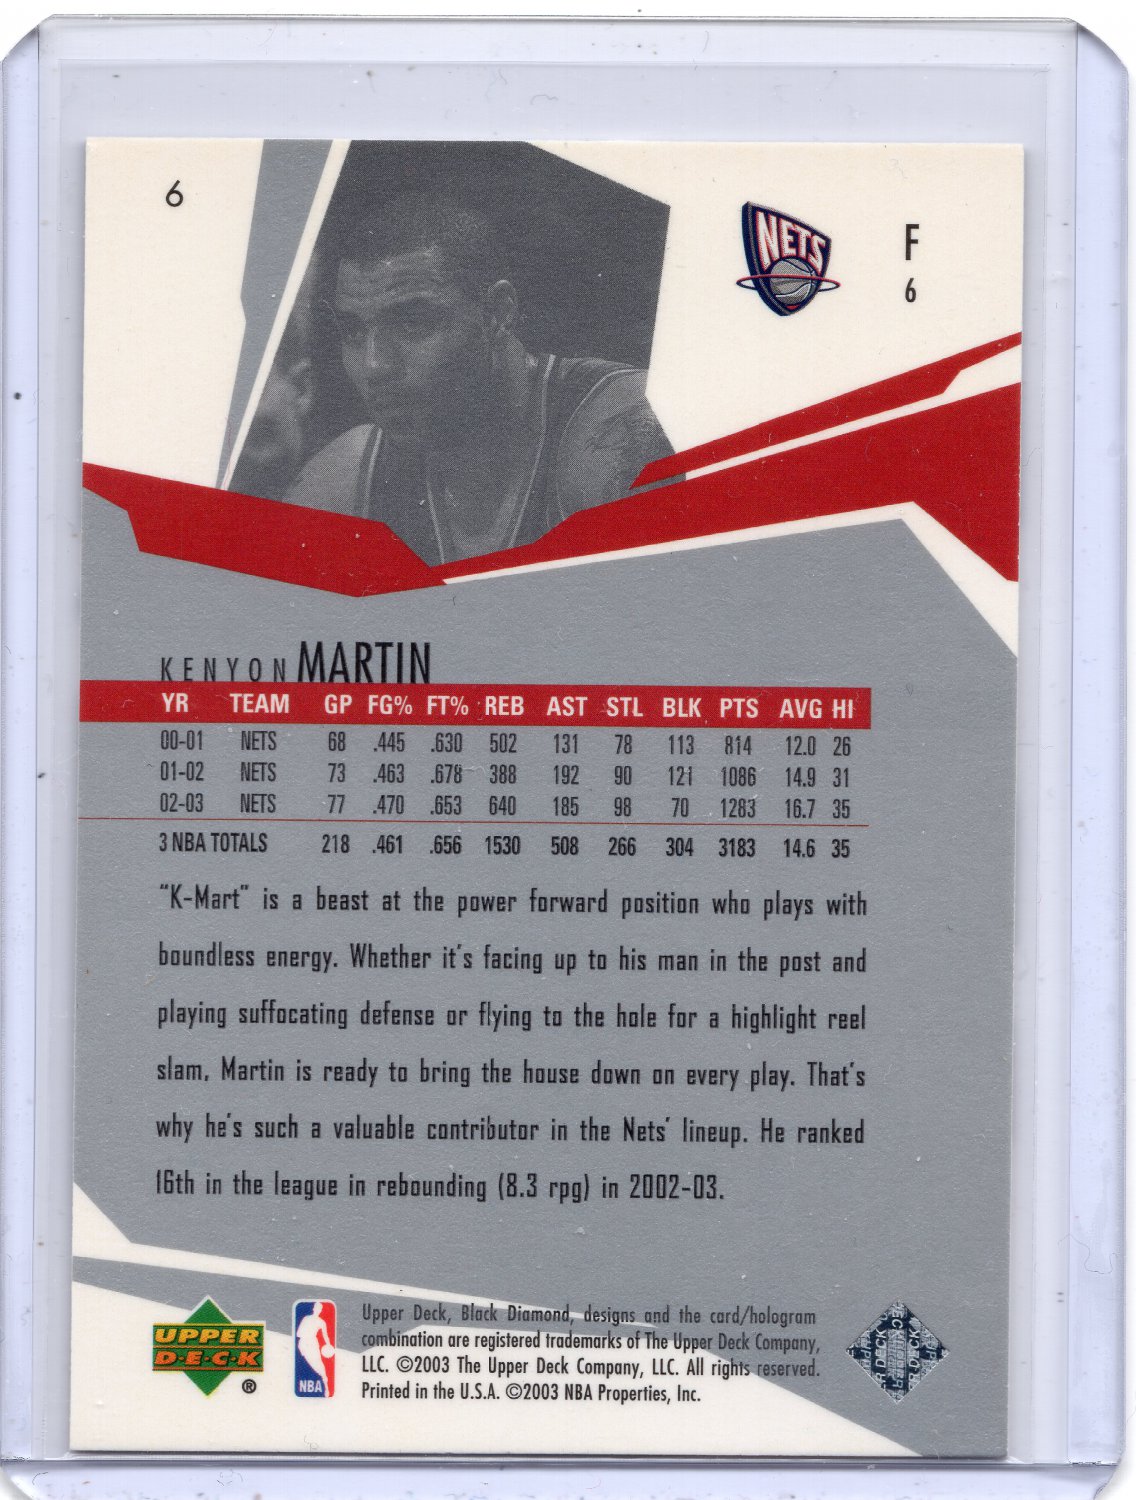 Kenyon Martin 2003-04 Upper Deck Black Diamond card #6 New Jersey Nets